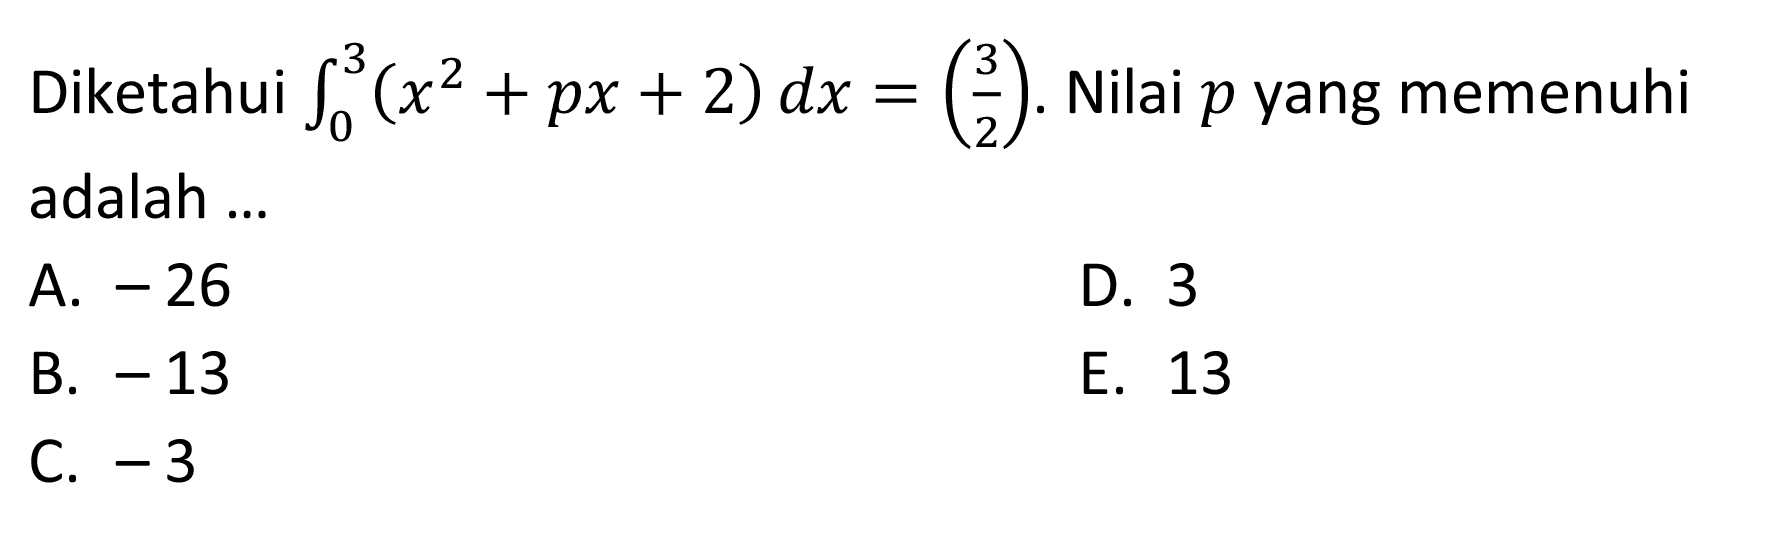 Diketahui integral 0 3 (x^2+px+2) d x=(3/2). Nilai p yang memenuhi adalah ...